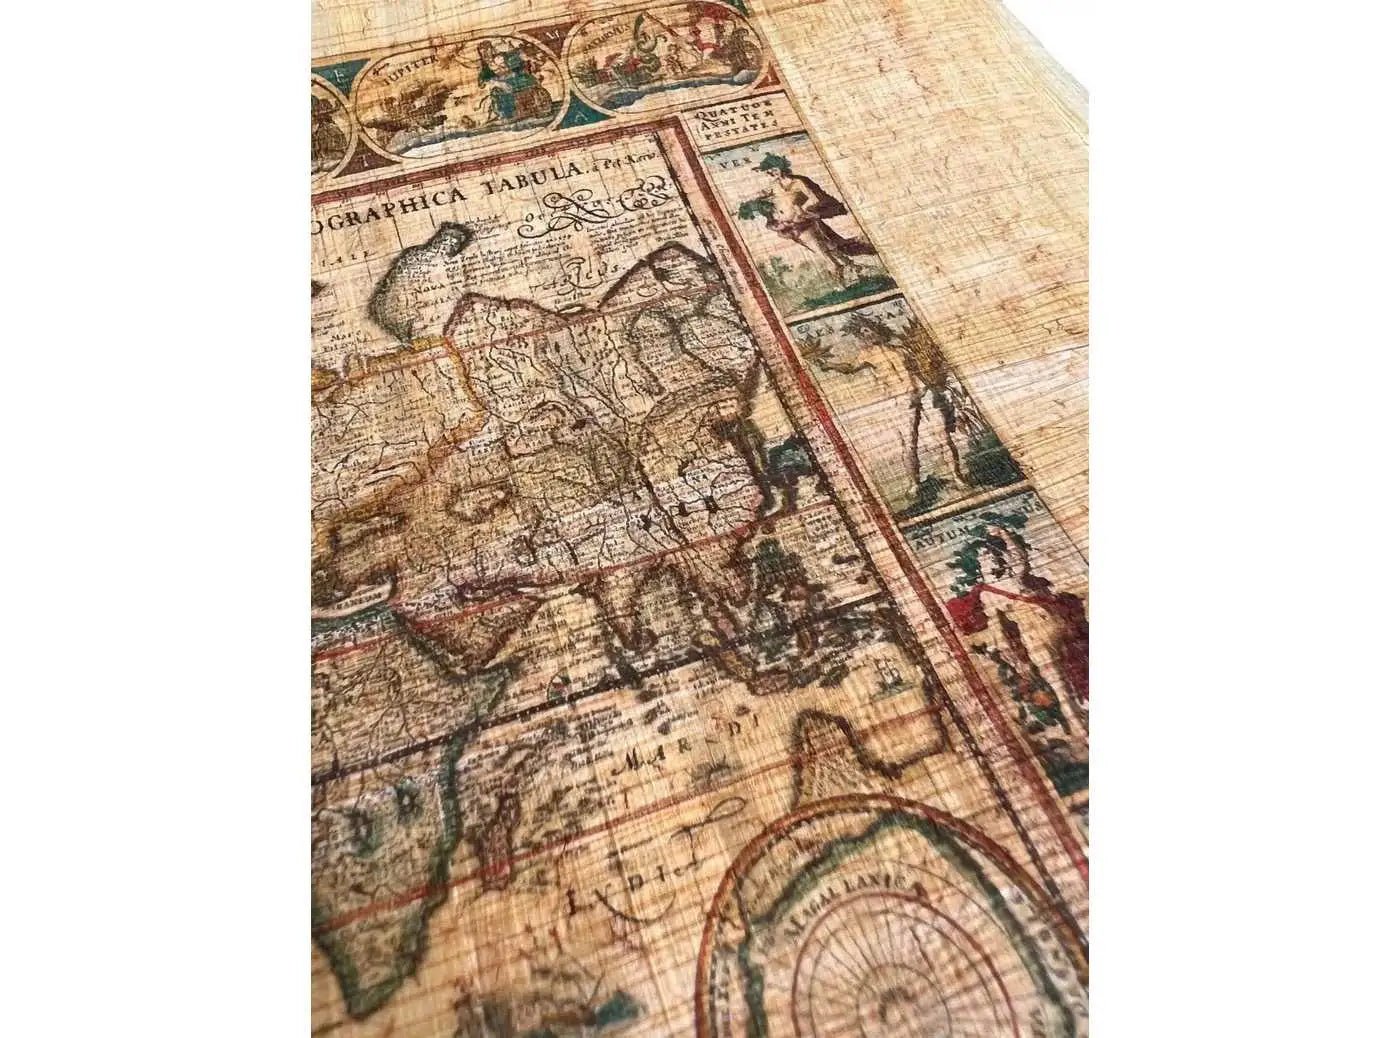 Nova Totius Terrarum Orbis Geographica Ac Hydrographica Tabula Vintage 17th Century World Ancient Map Illustration Wall Art